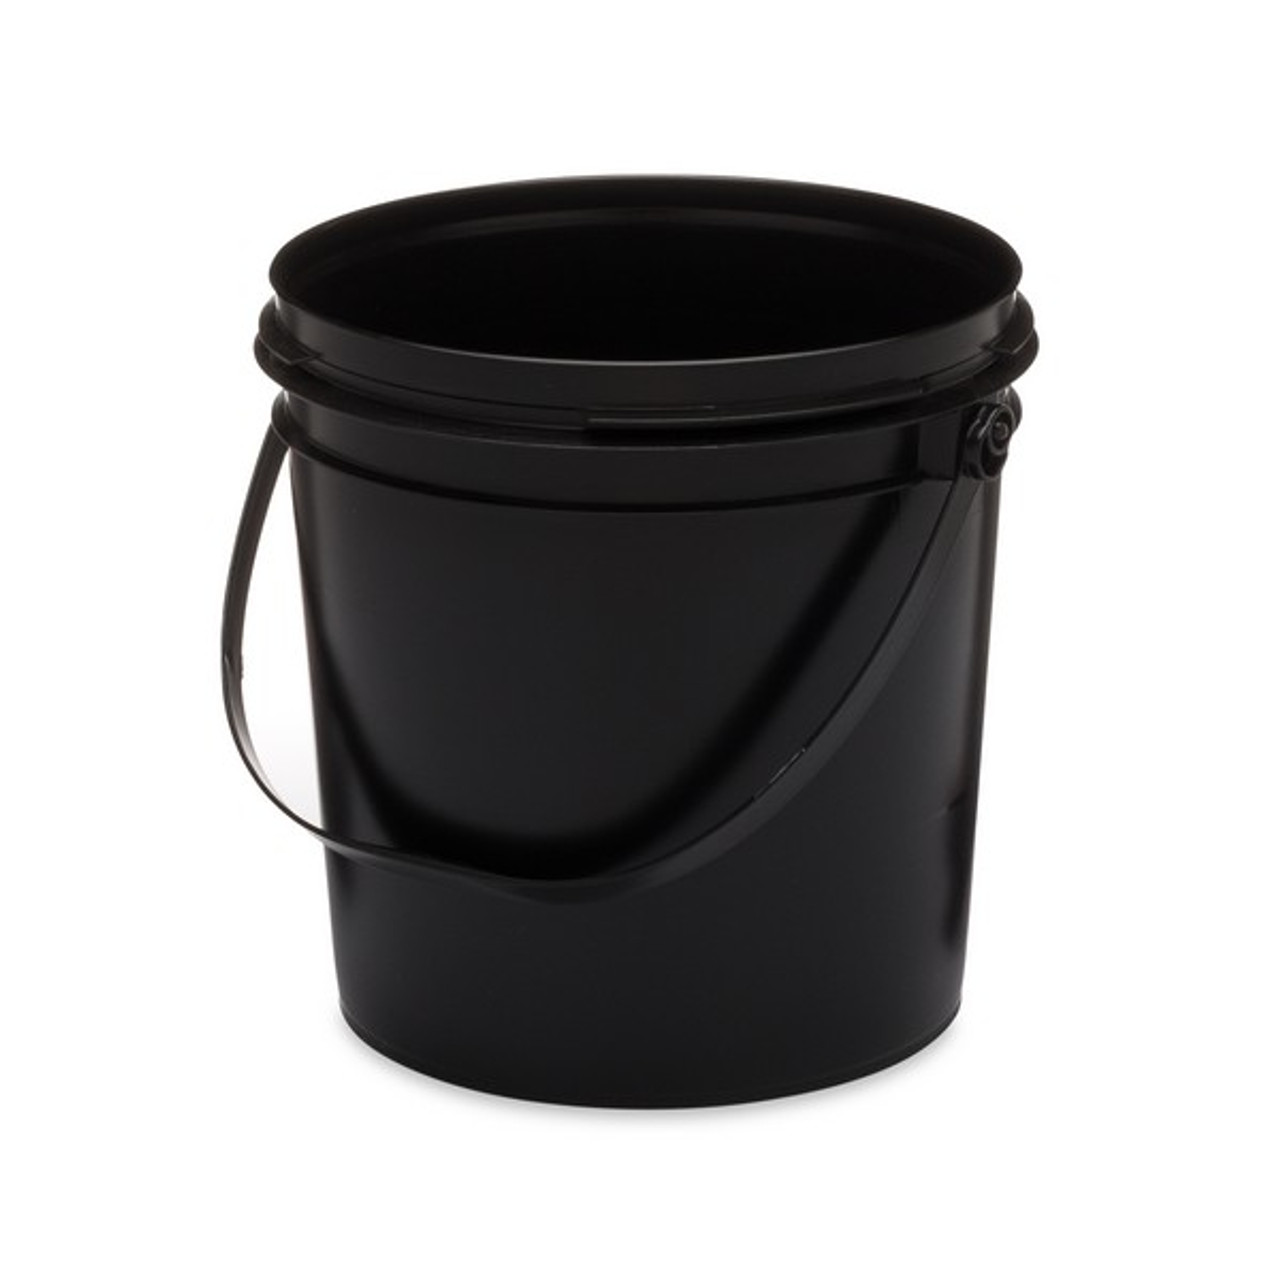 3.5 Gallon Screw Top Round Plastic Buckets w/ Plastic Handle & Lid